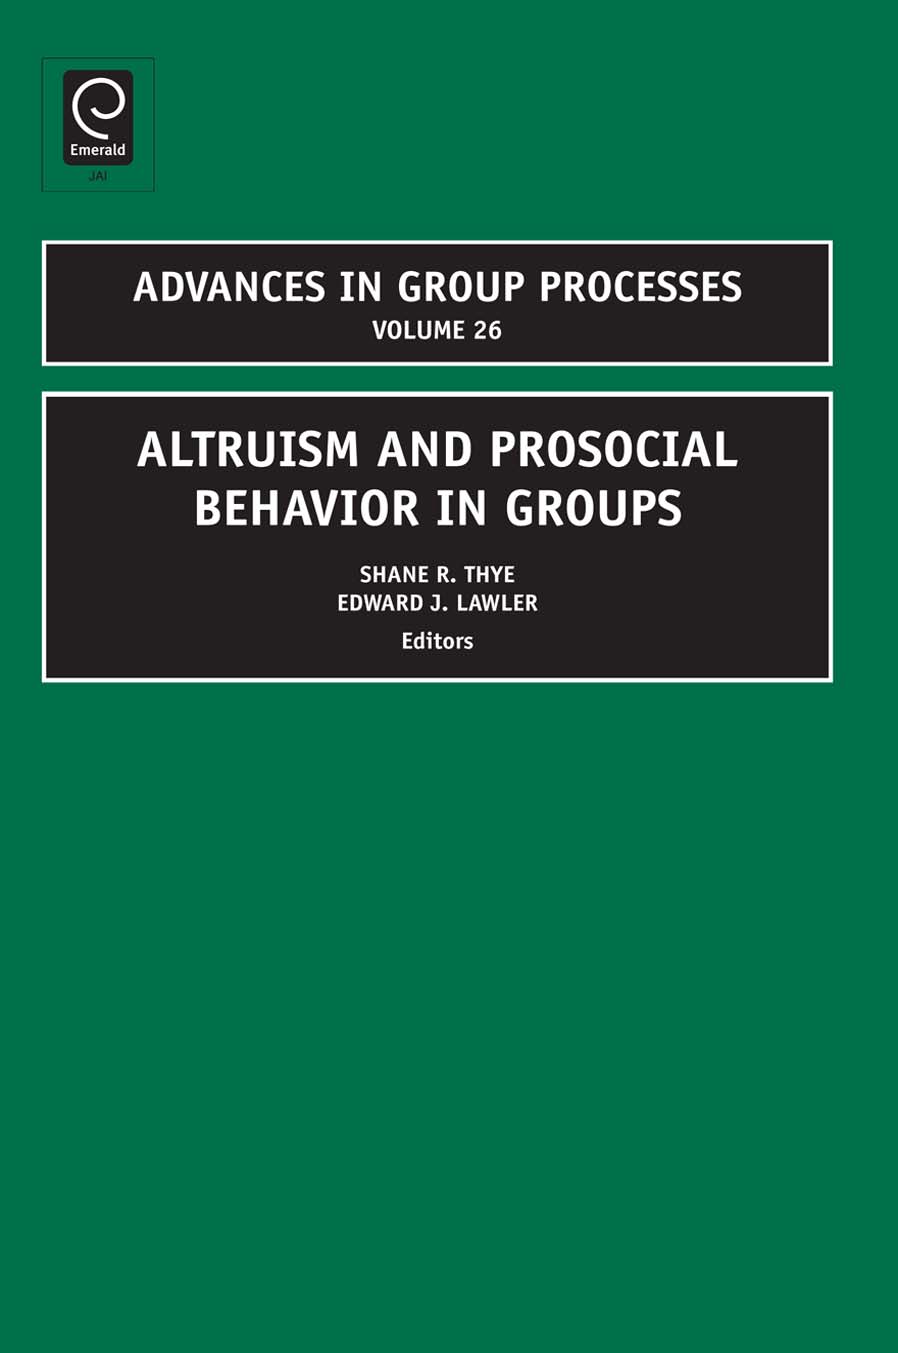 Altruism and Prosocial Behavior in Groups - Shane R. Thye, Edward J. Lawler